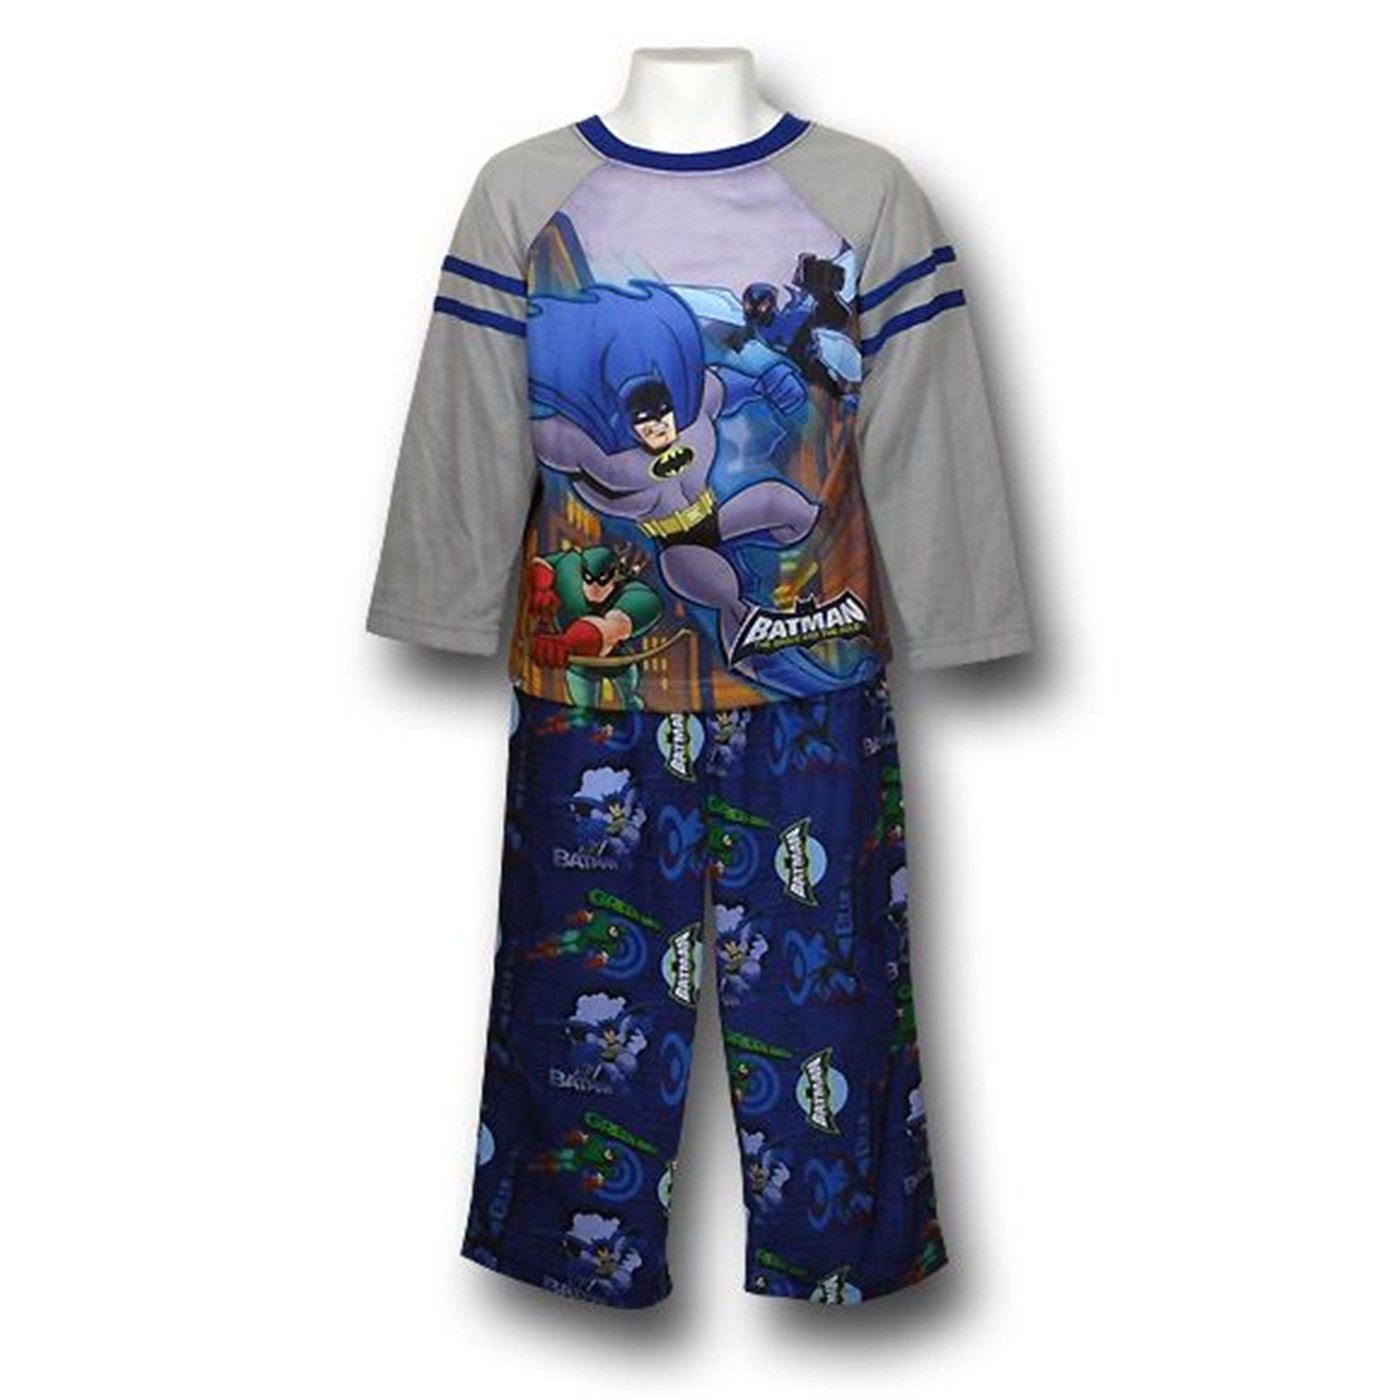 Batman Brave and the Bold Kids Pajamas